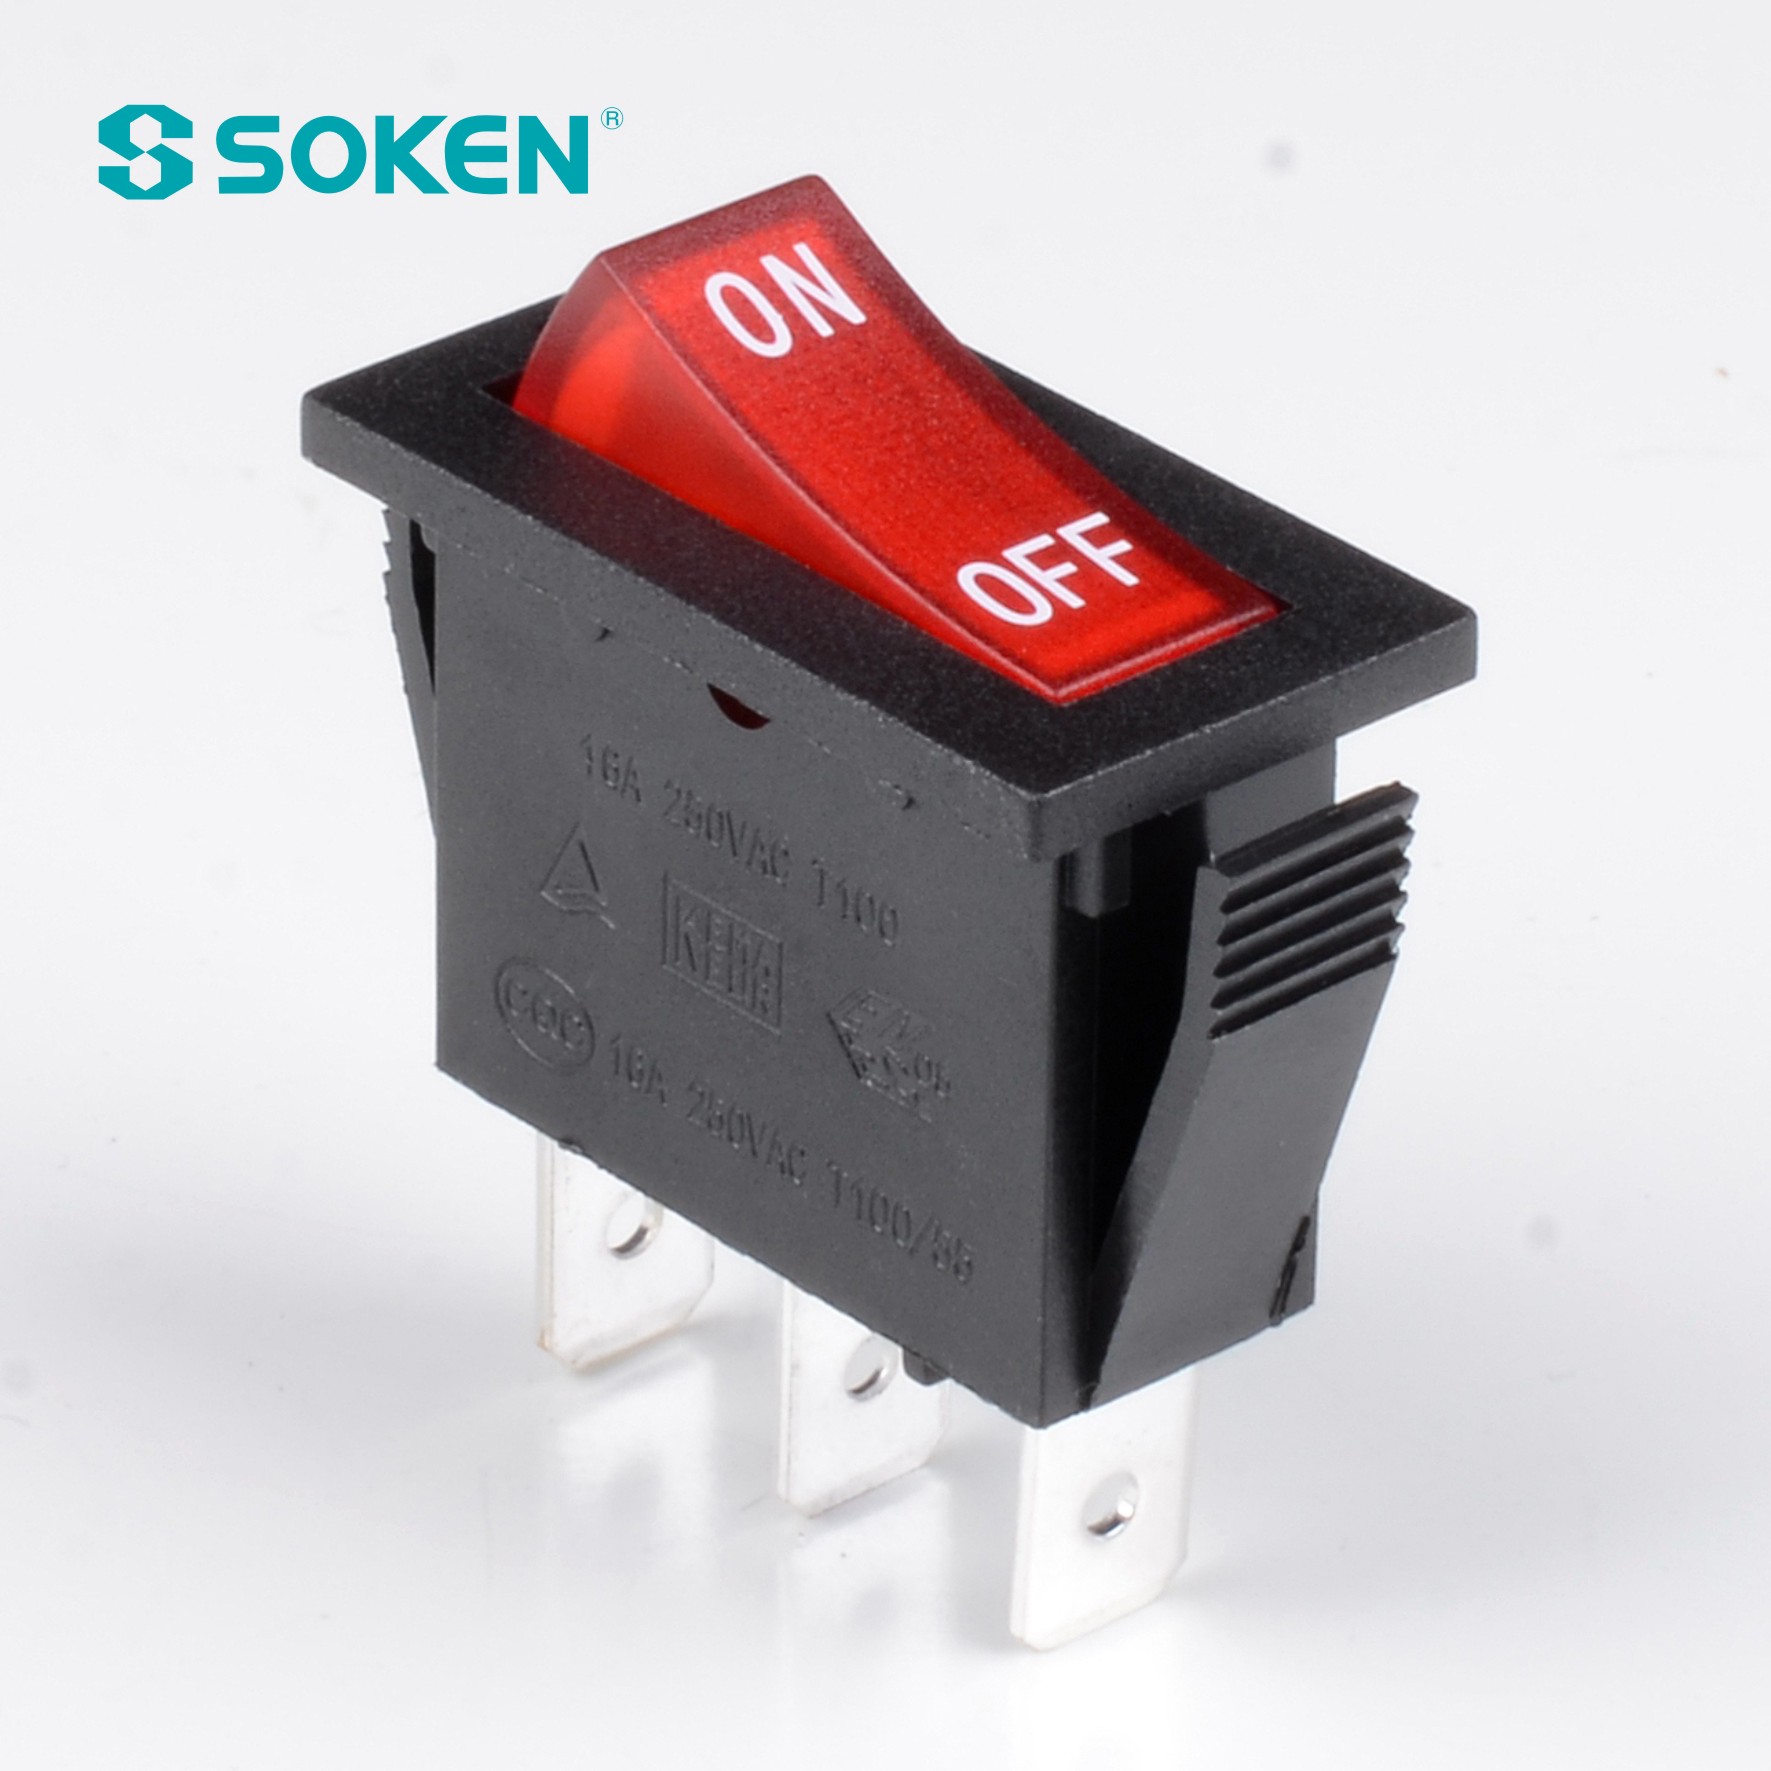 Soken Rk1-16 1X1n B/R ar ceal ó Rocker Switch